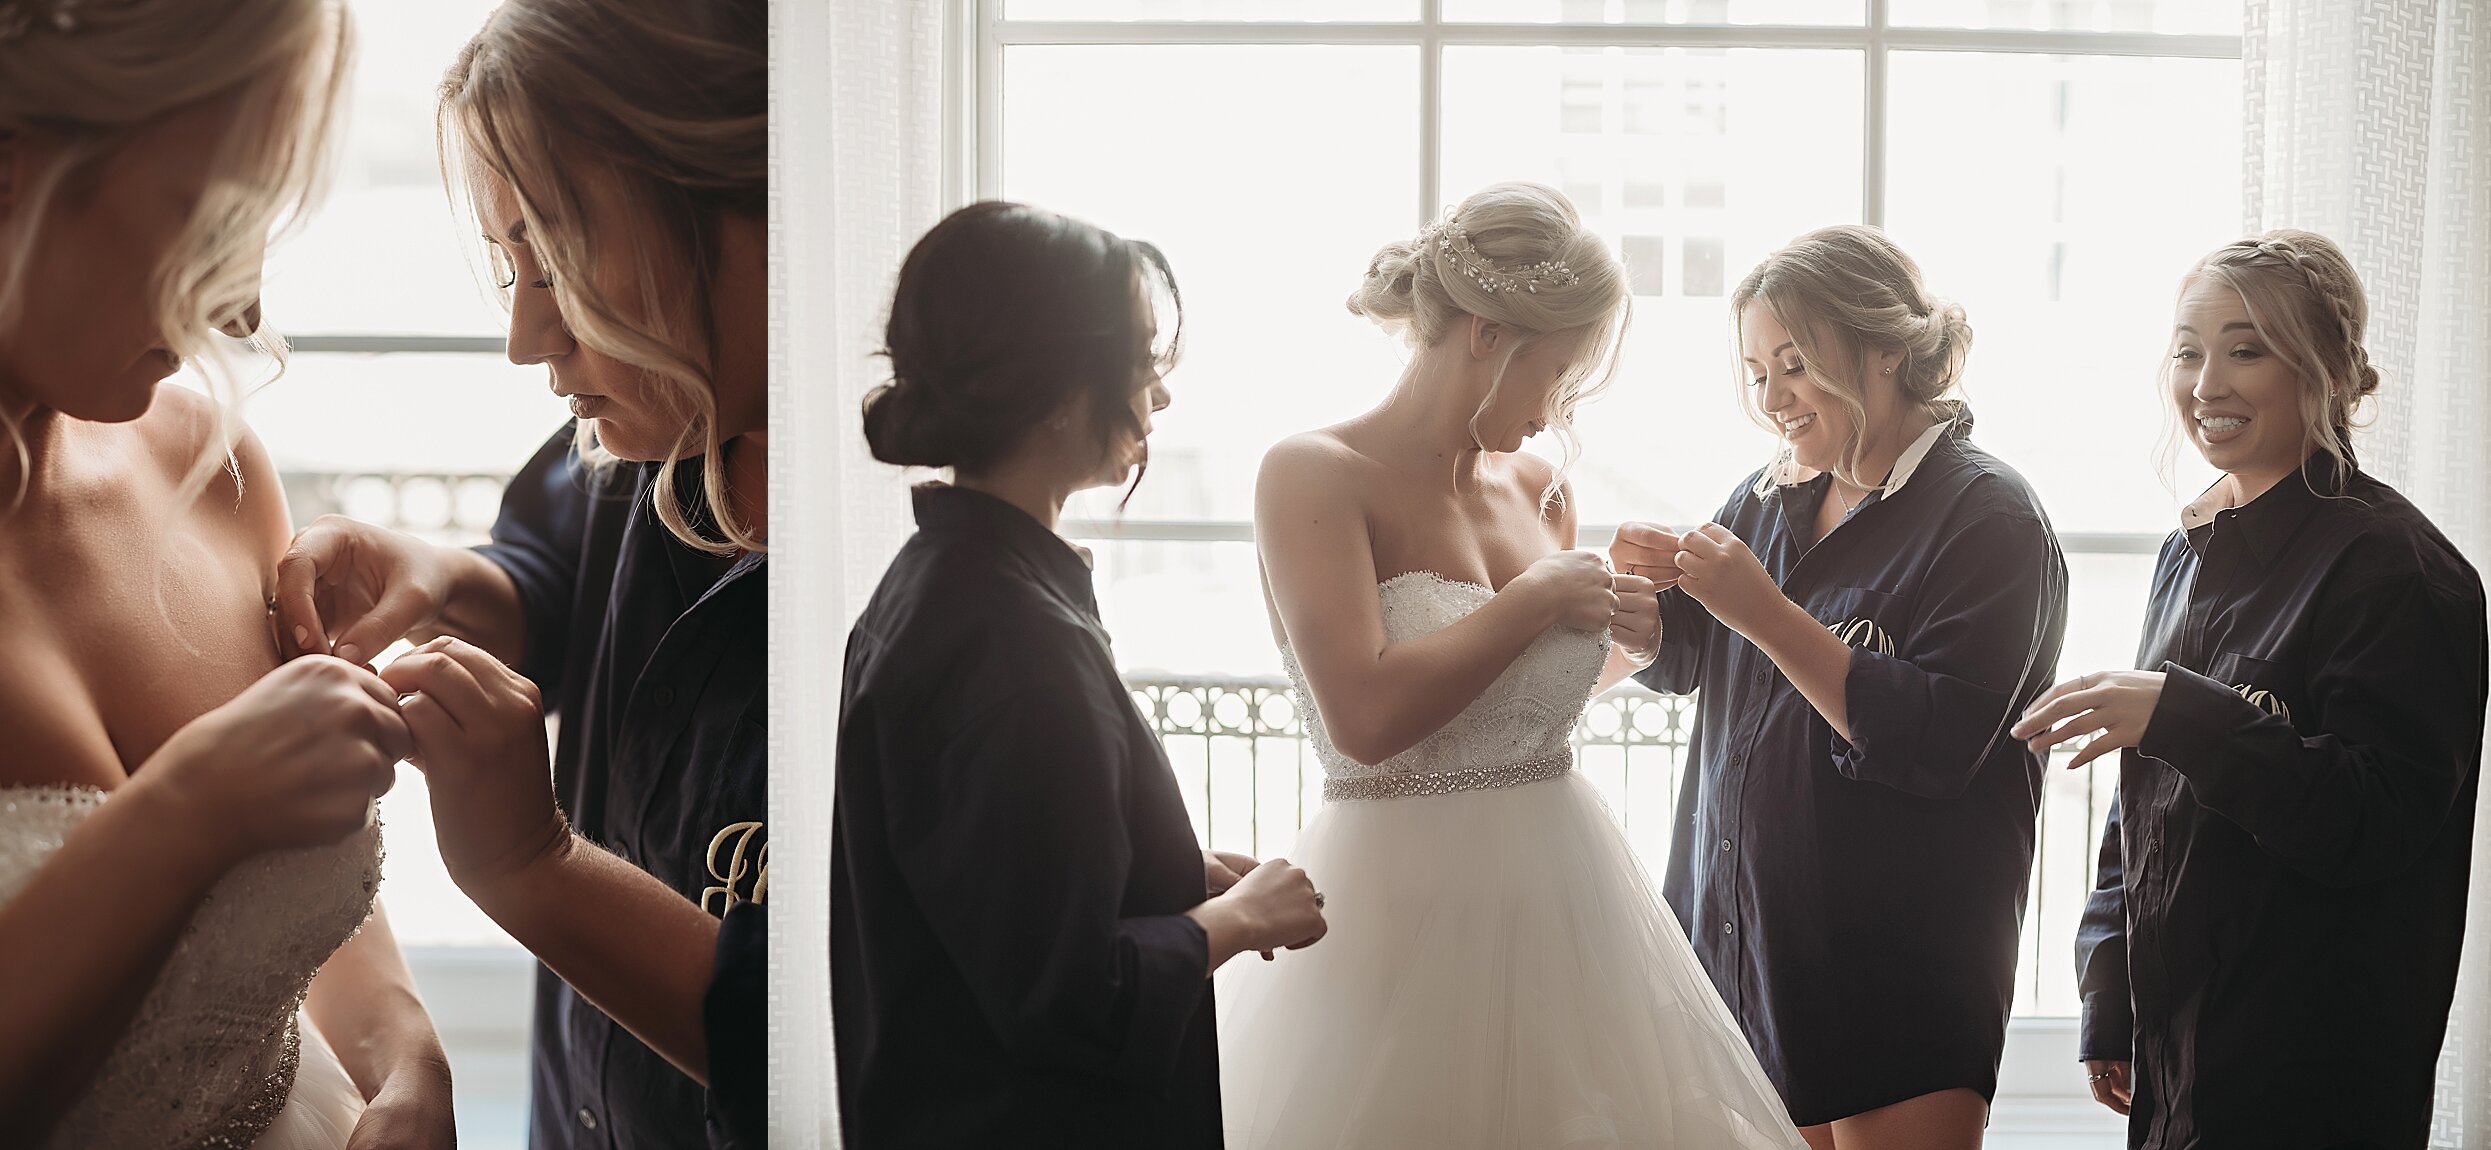 alpha xi delta sorority sisters help bride pin quill pin on wedding dress